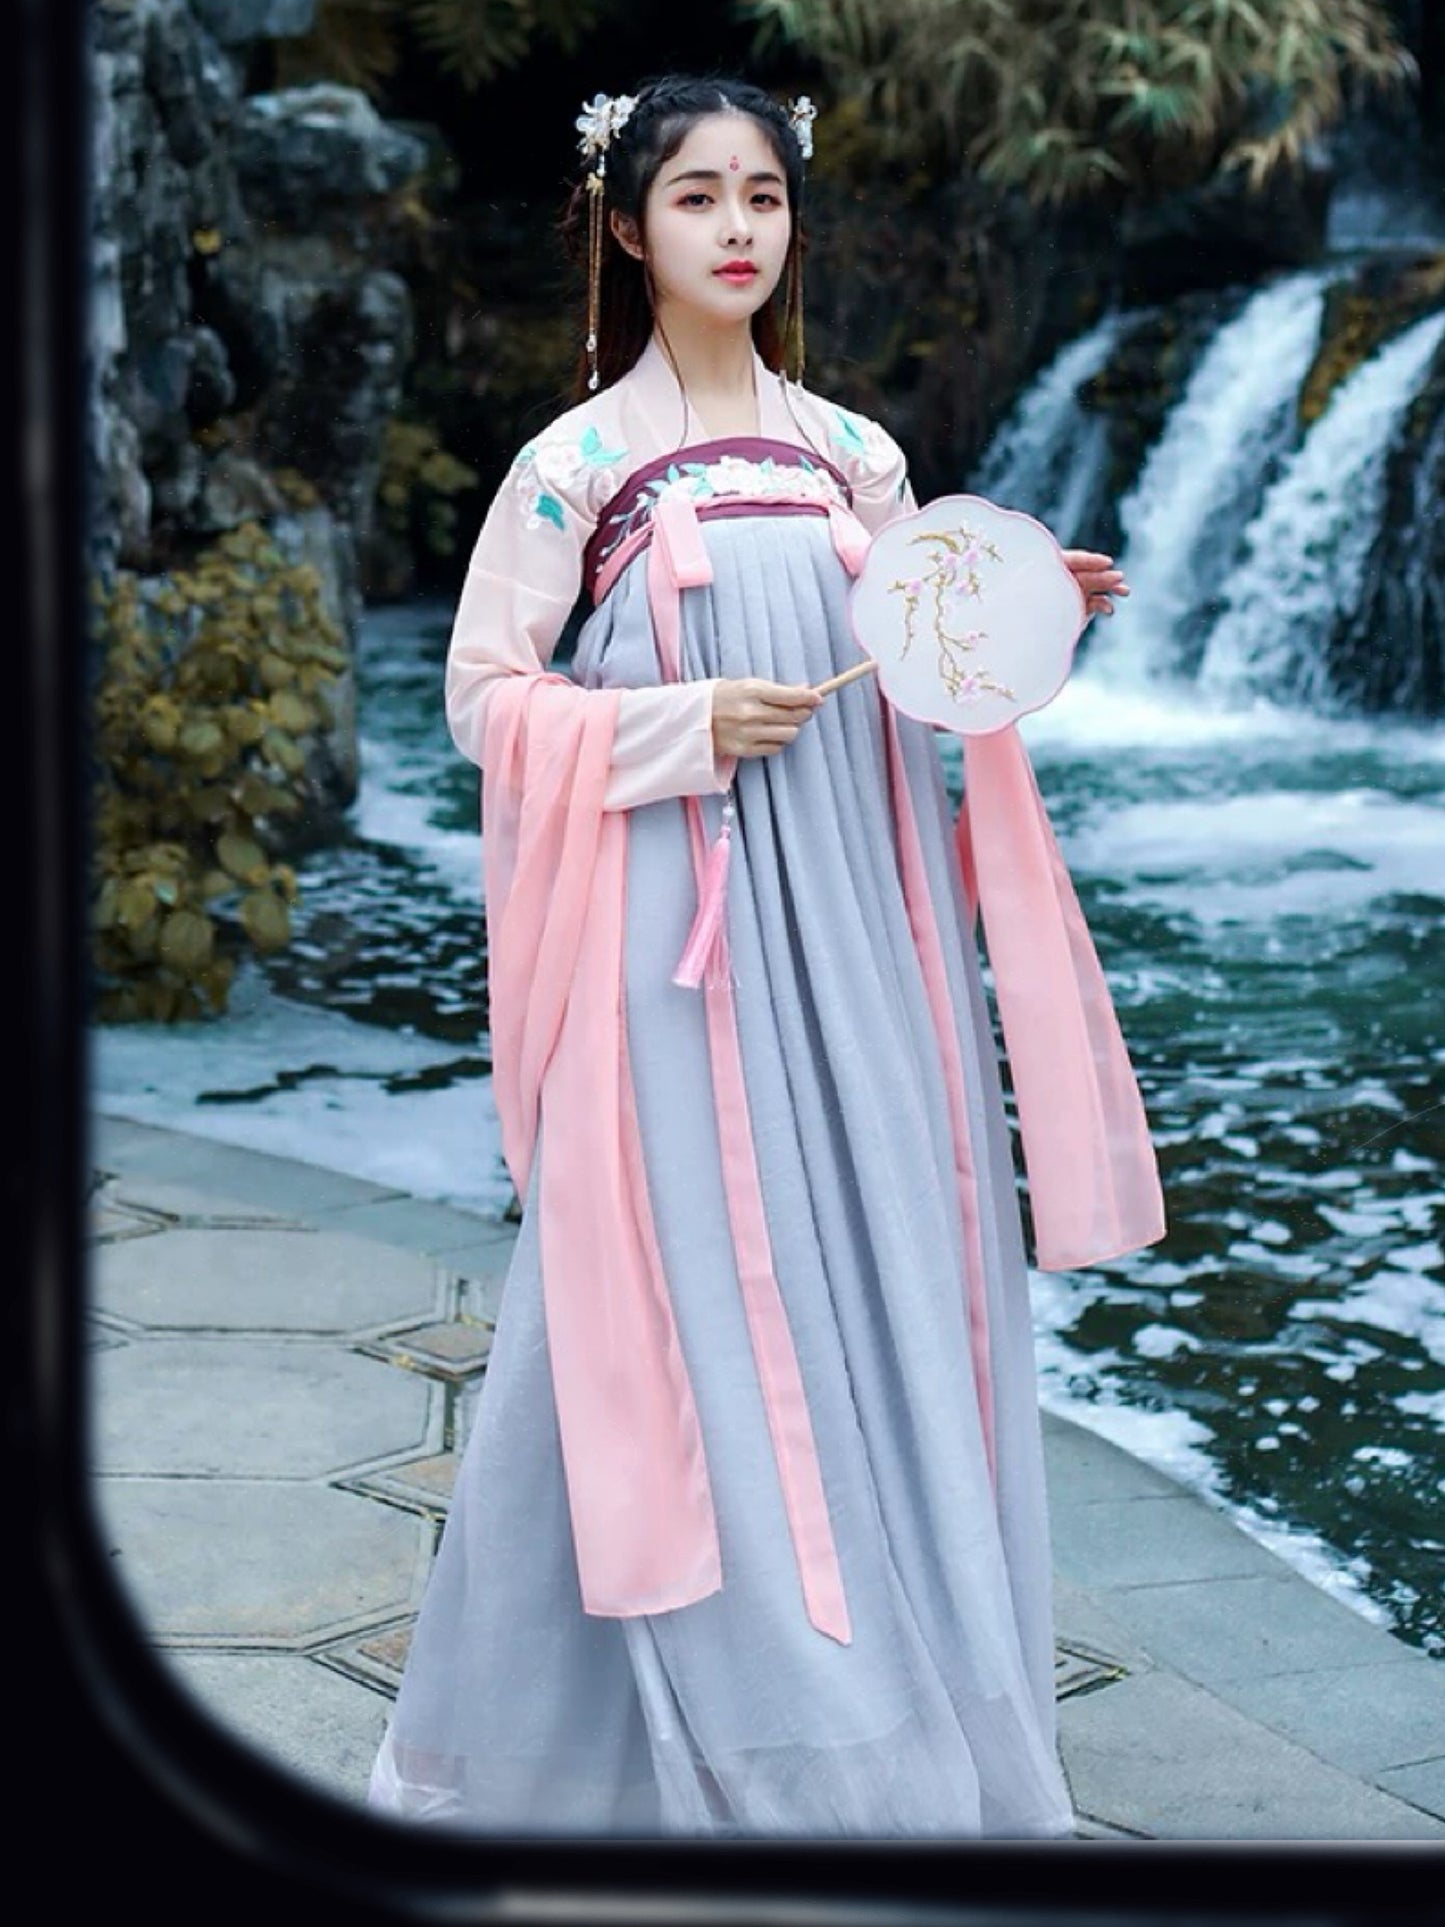 Peach Blossom Elegance: Traditional Qi Chest Ru Skirt Hanfu for Women -  Chinese Heritage Fashion